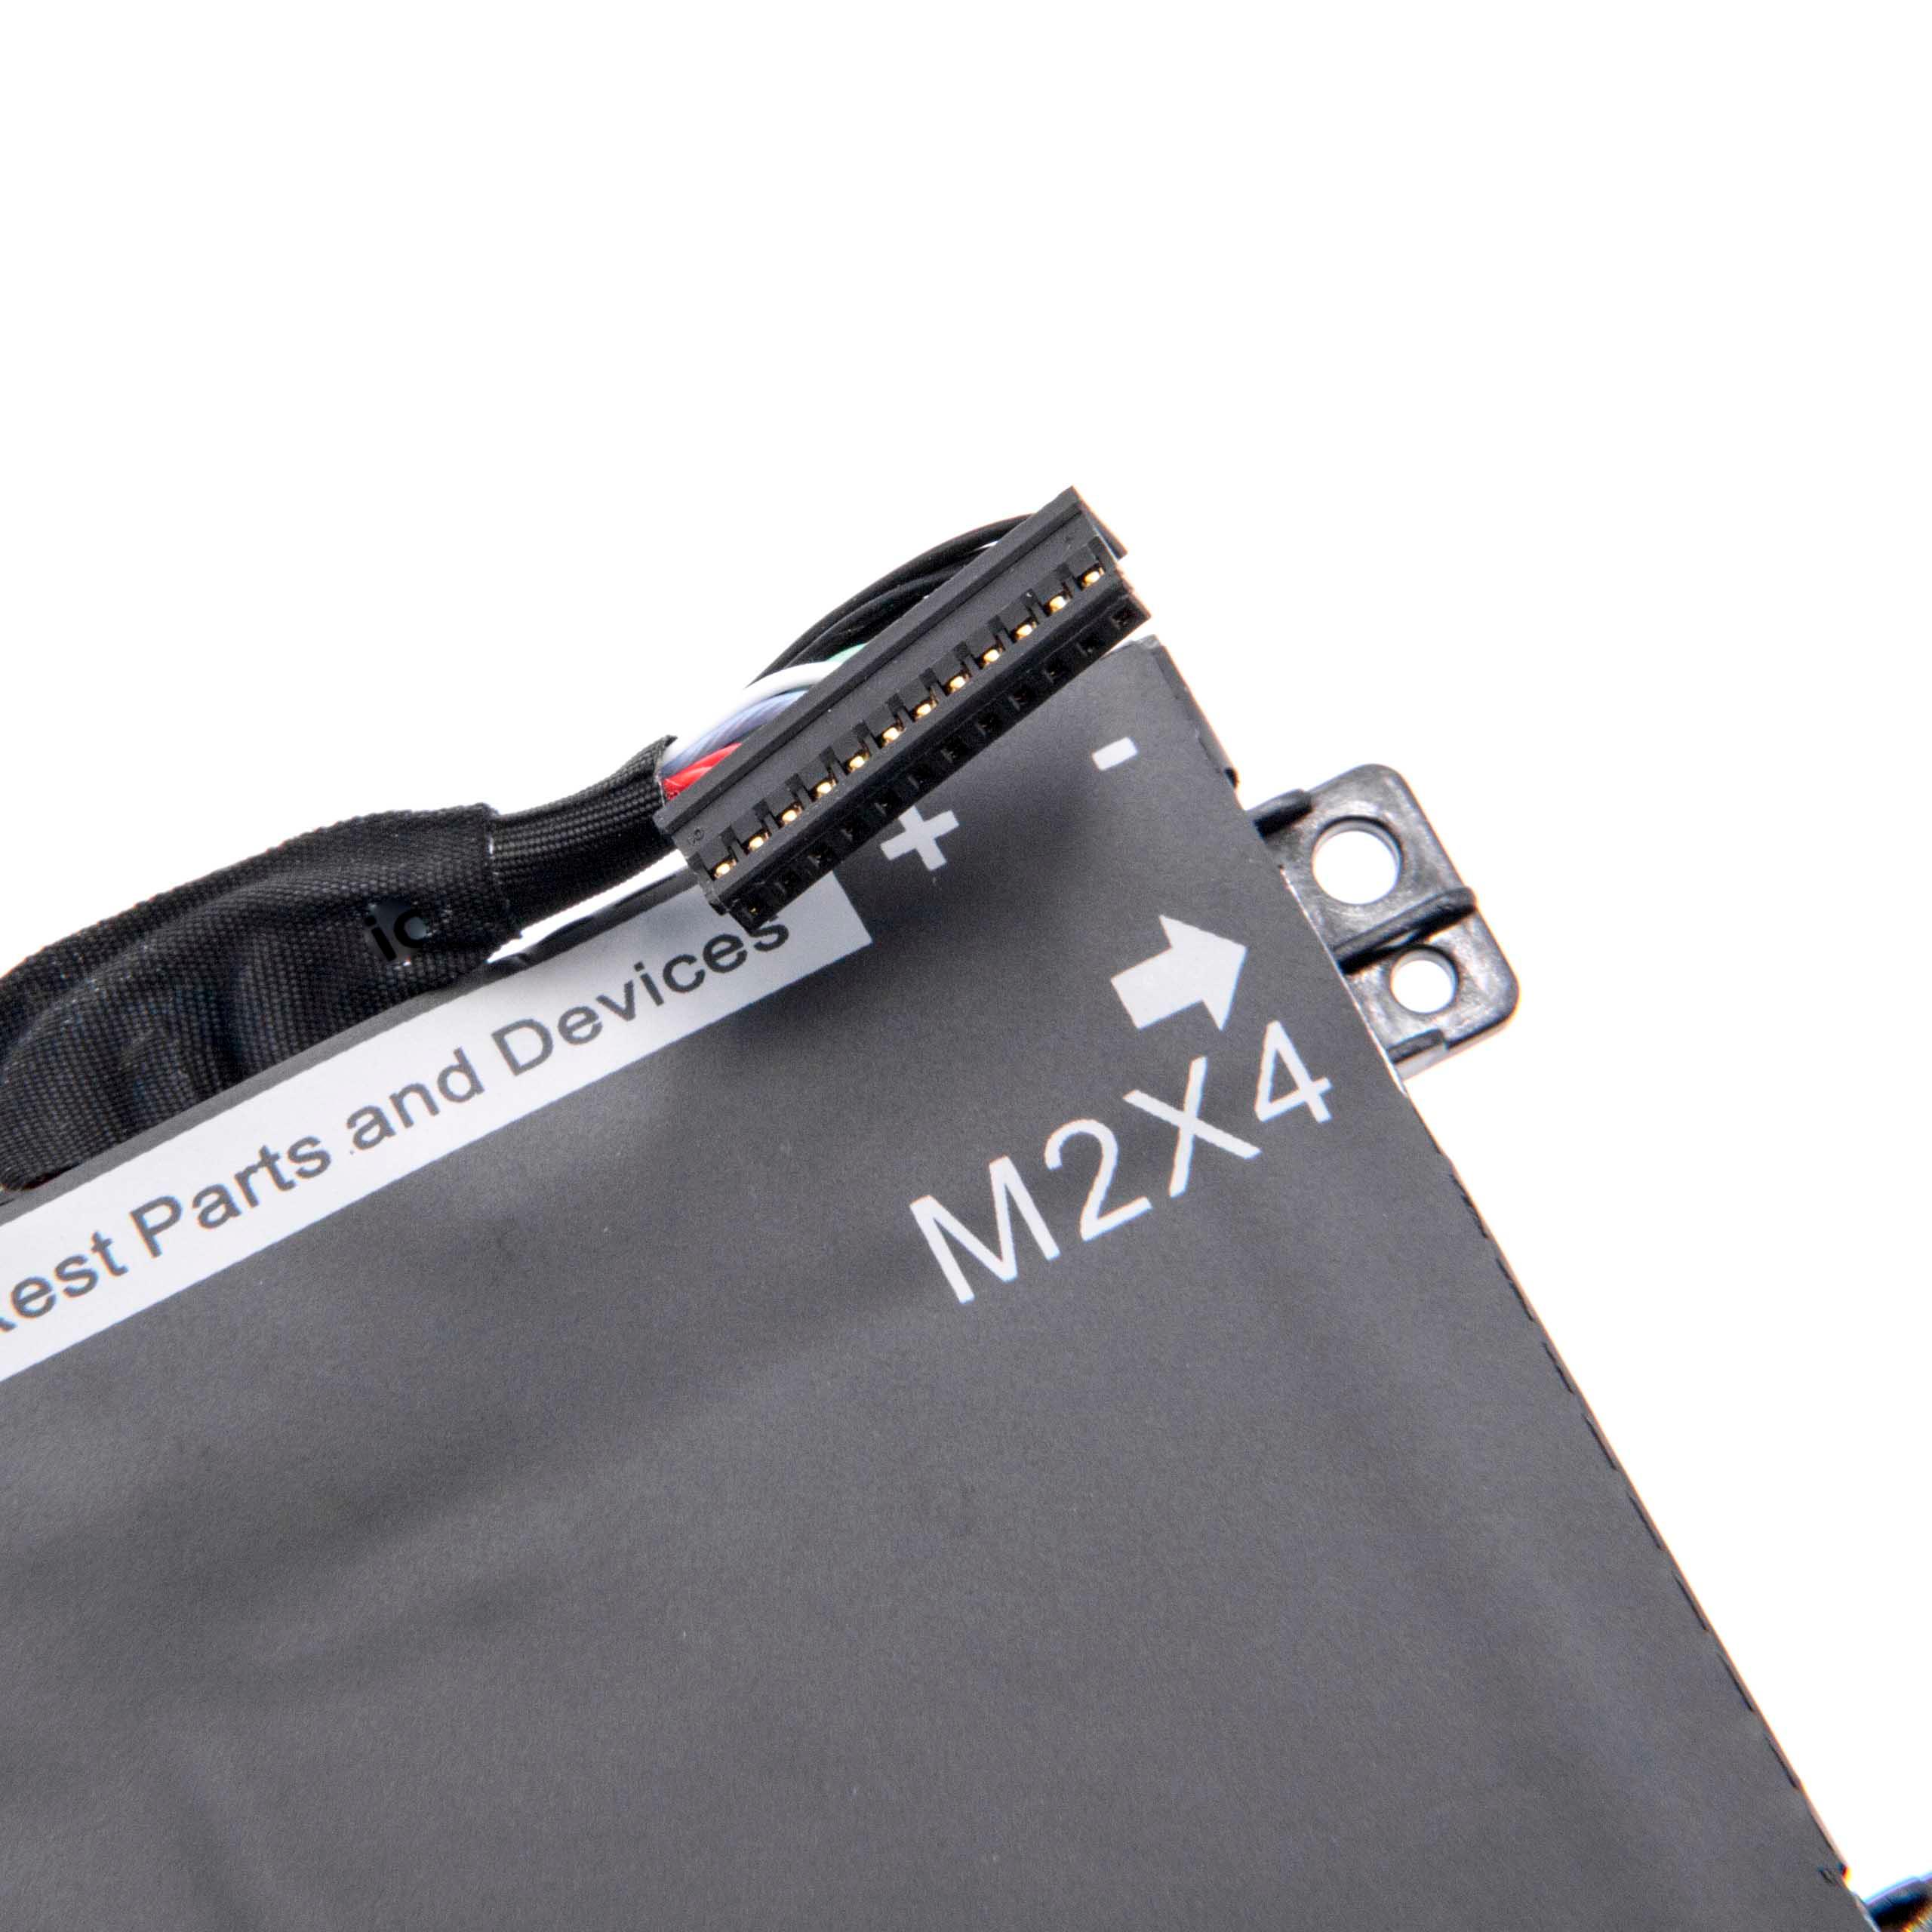 Notebook Battery Replacement for Dell 01P6KD, 62MJV, 1P6KD, M7R96, 4GVGH, 062MJV - 7300mAh 11.4V Li-Ion, black